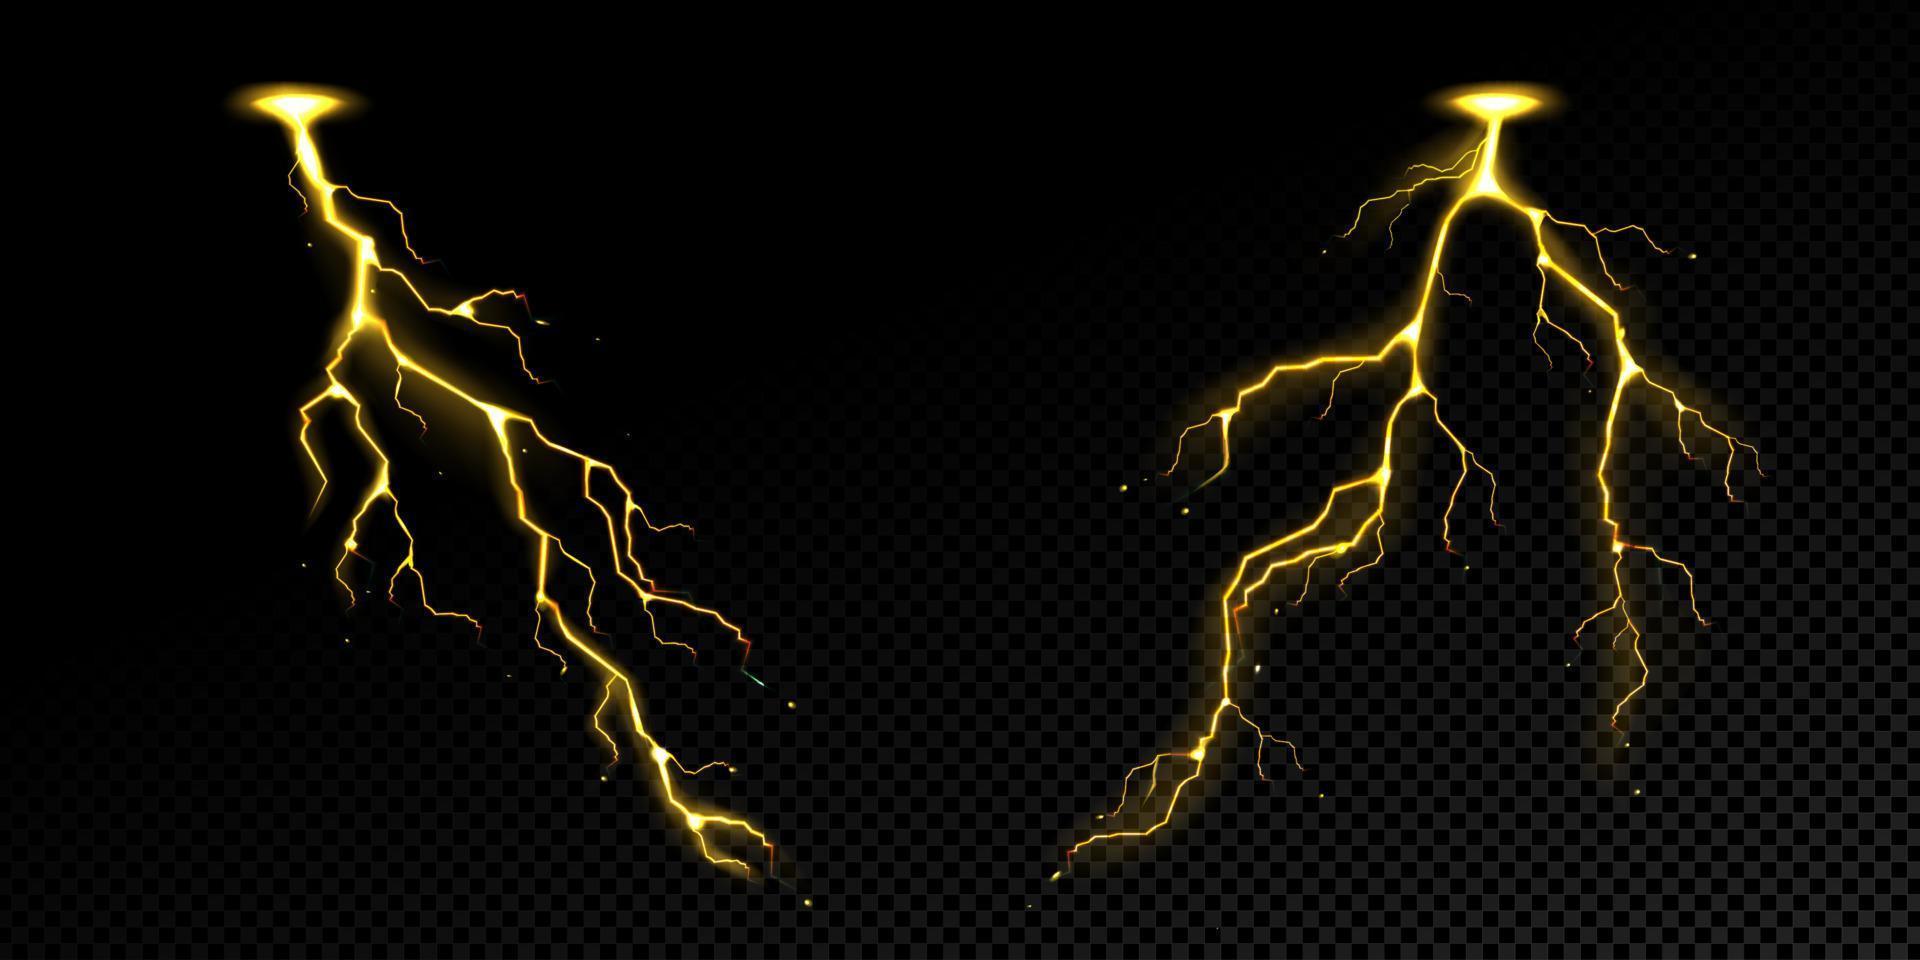 bliksem effect, onweersbui, goud storm stakingen vector